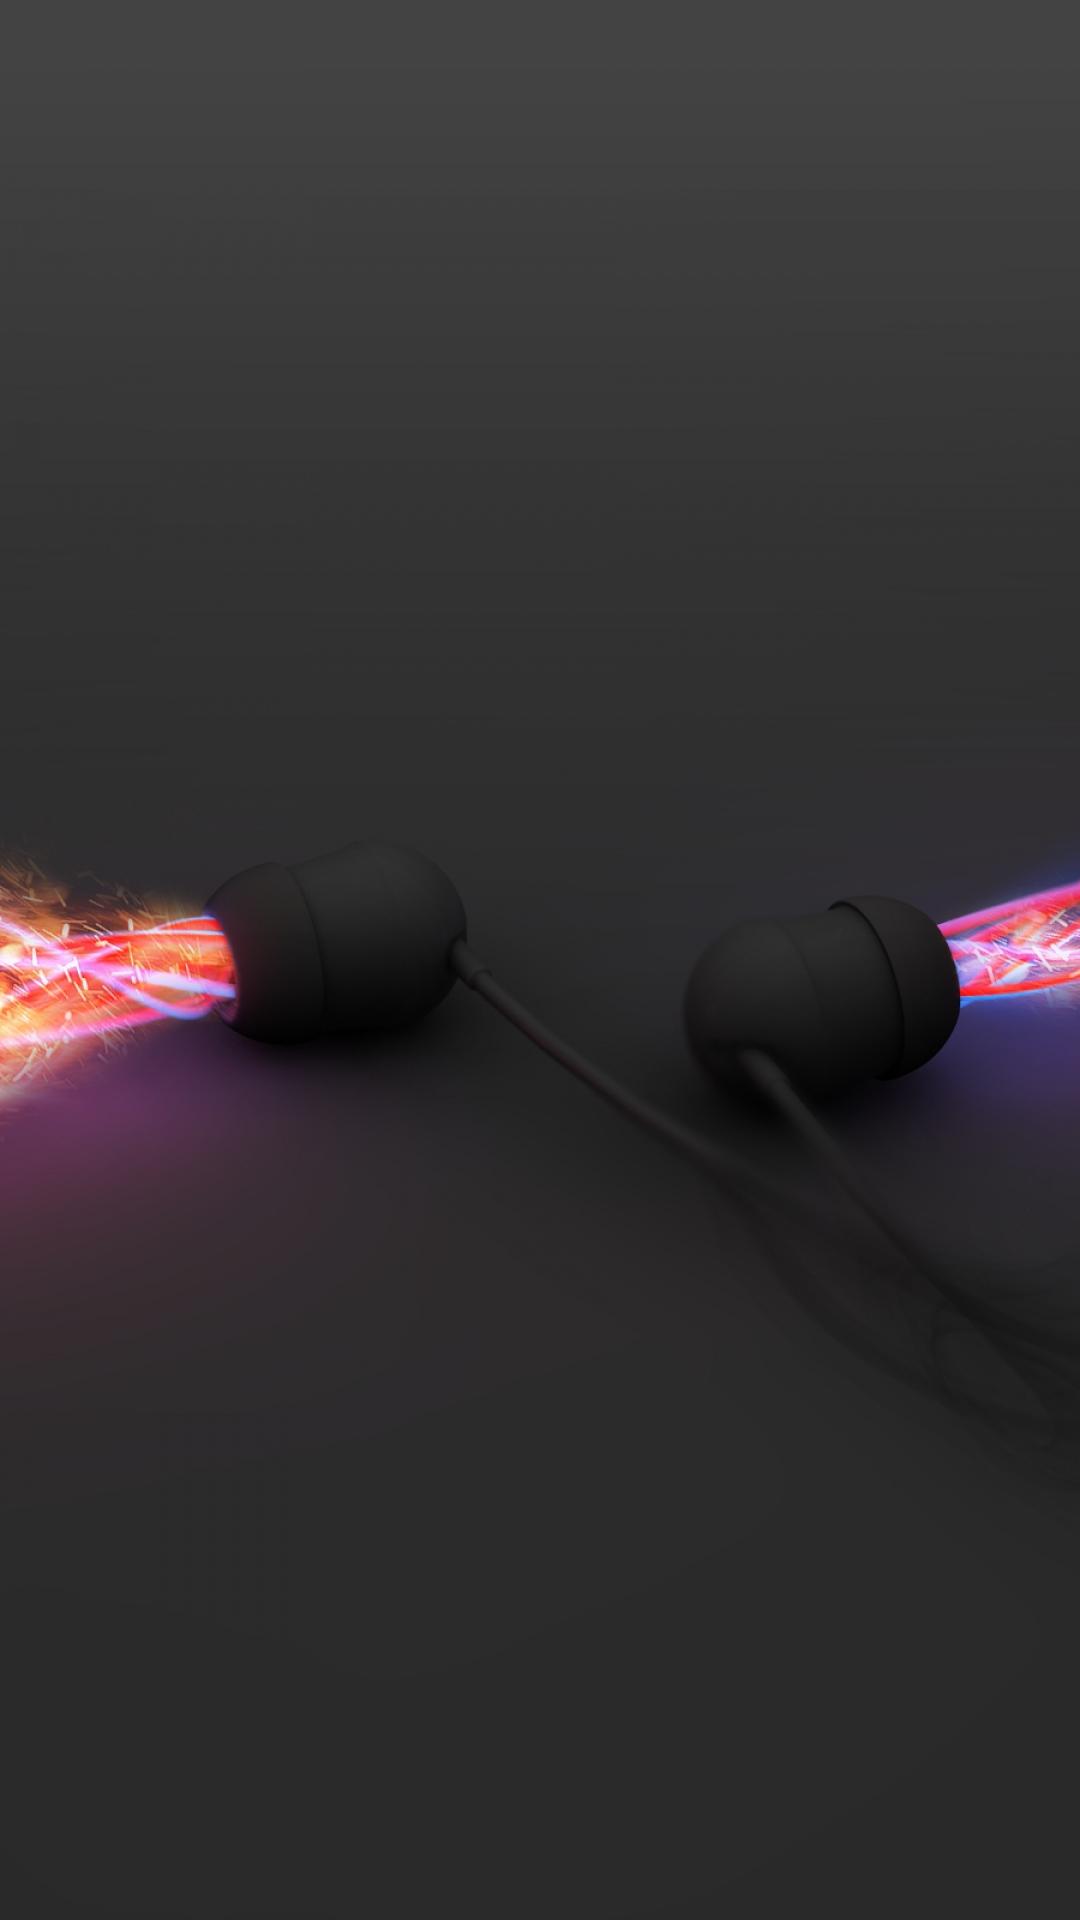 Black In Ear Headphones Rainbows Android Wallpaper free download